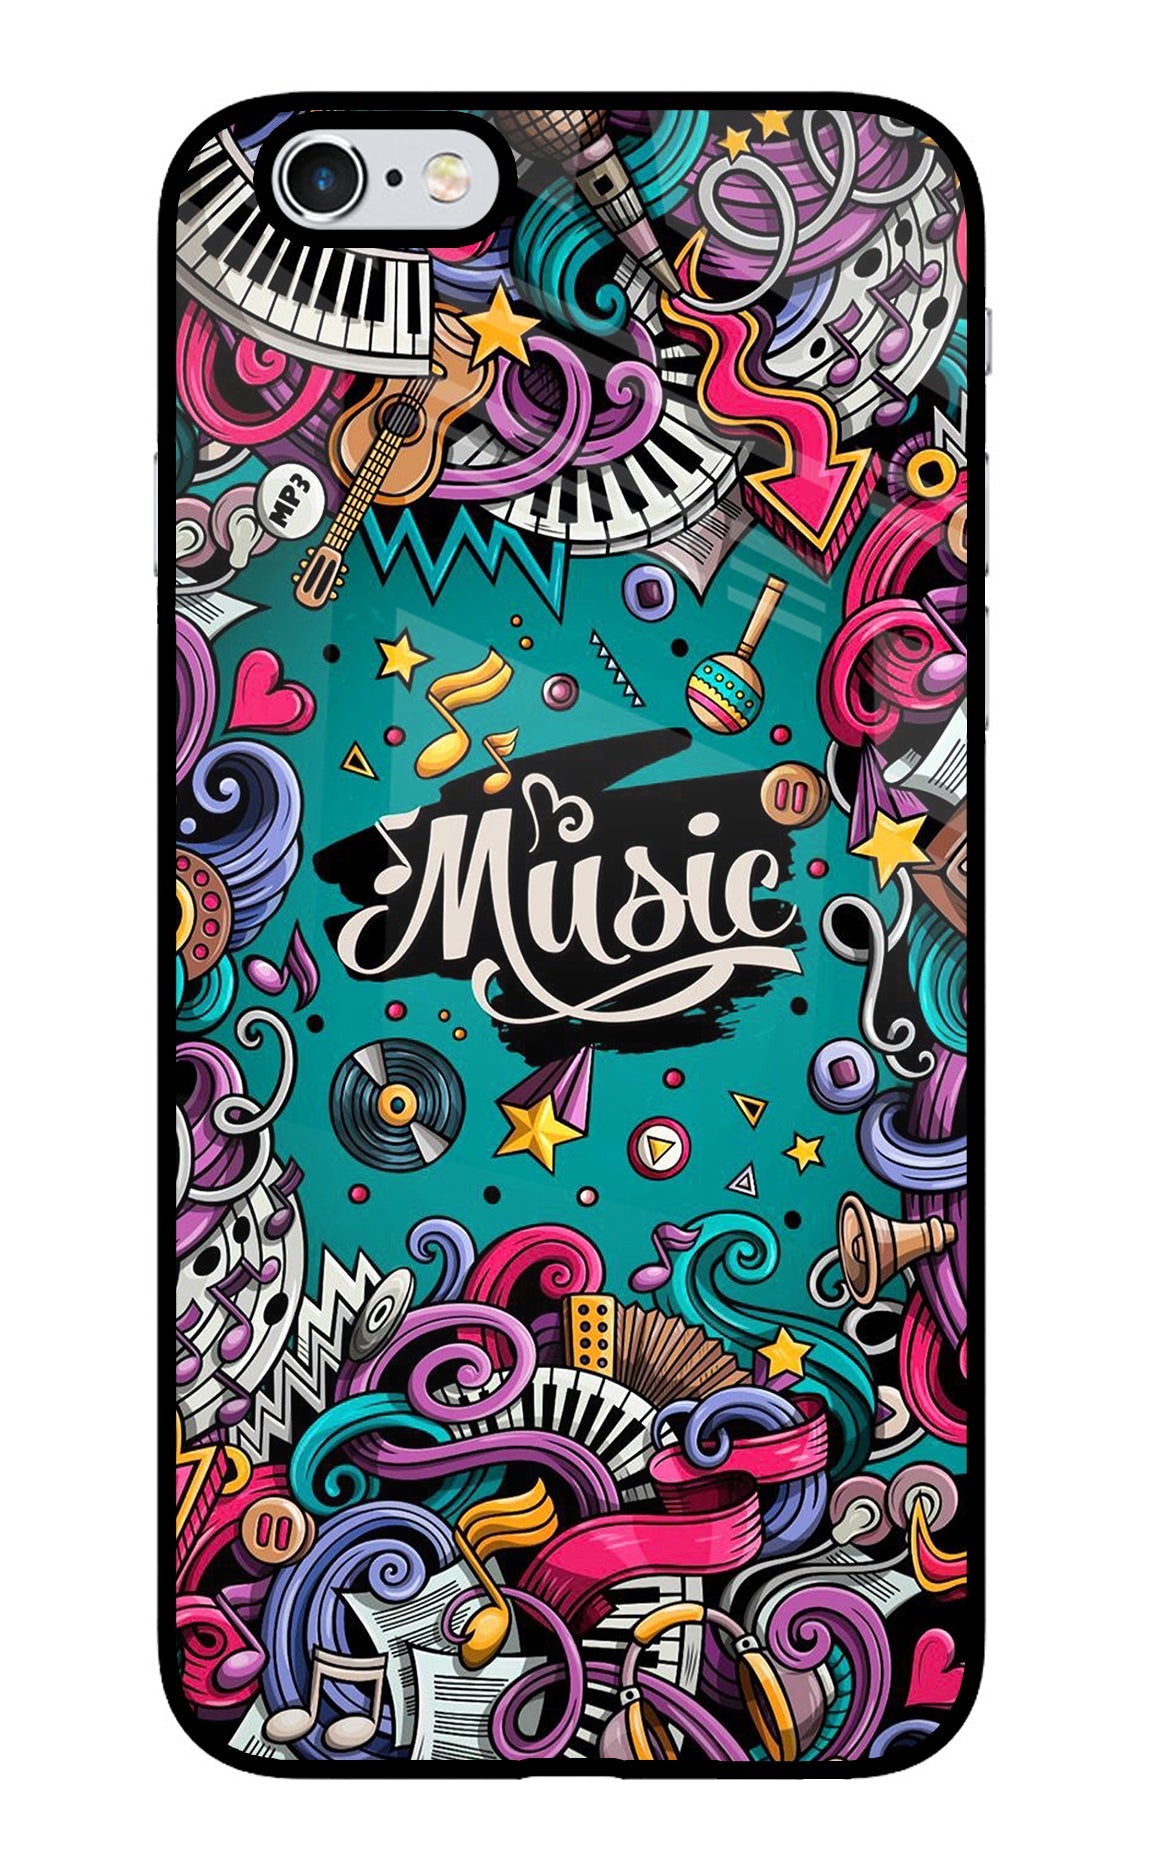 Music Graffiti iPhone 6/6s Back Cover